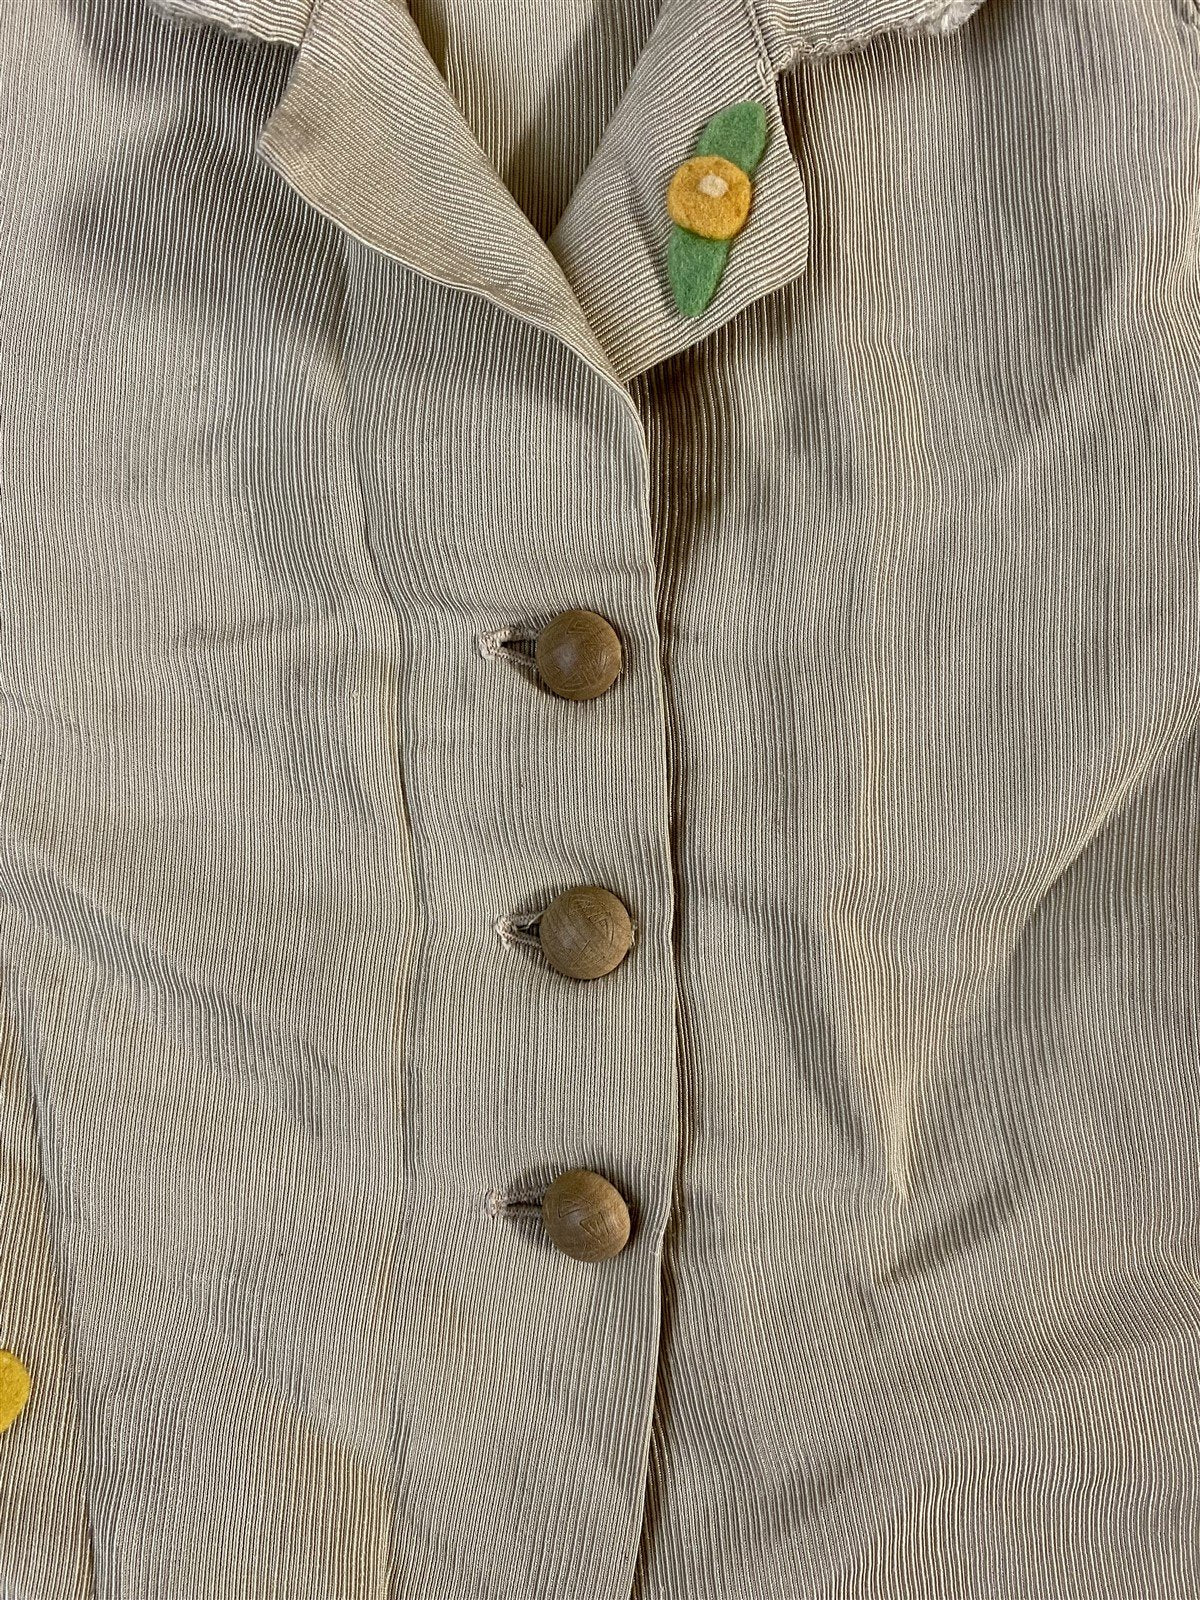 Handmade Vintage Children's (or Doll) Tan Ribbed Felt Detailed Jacket